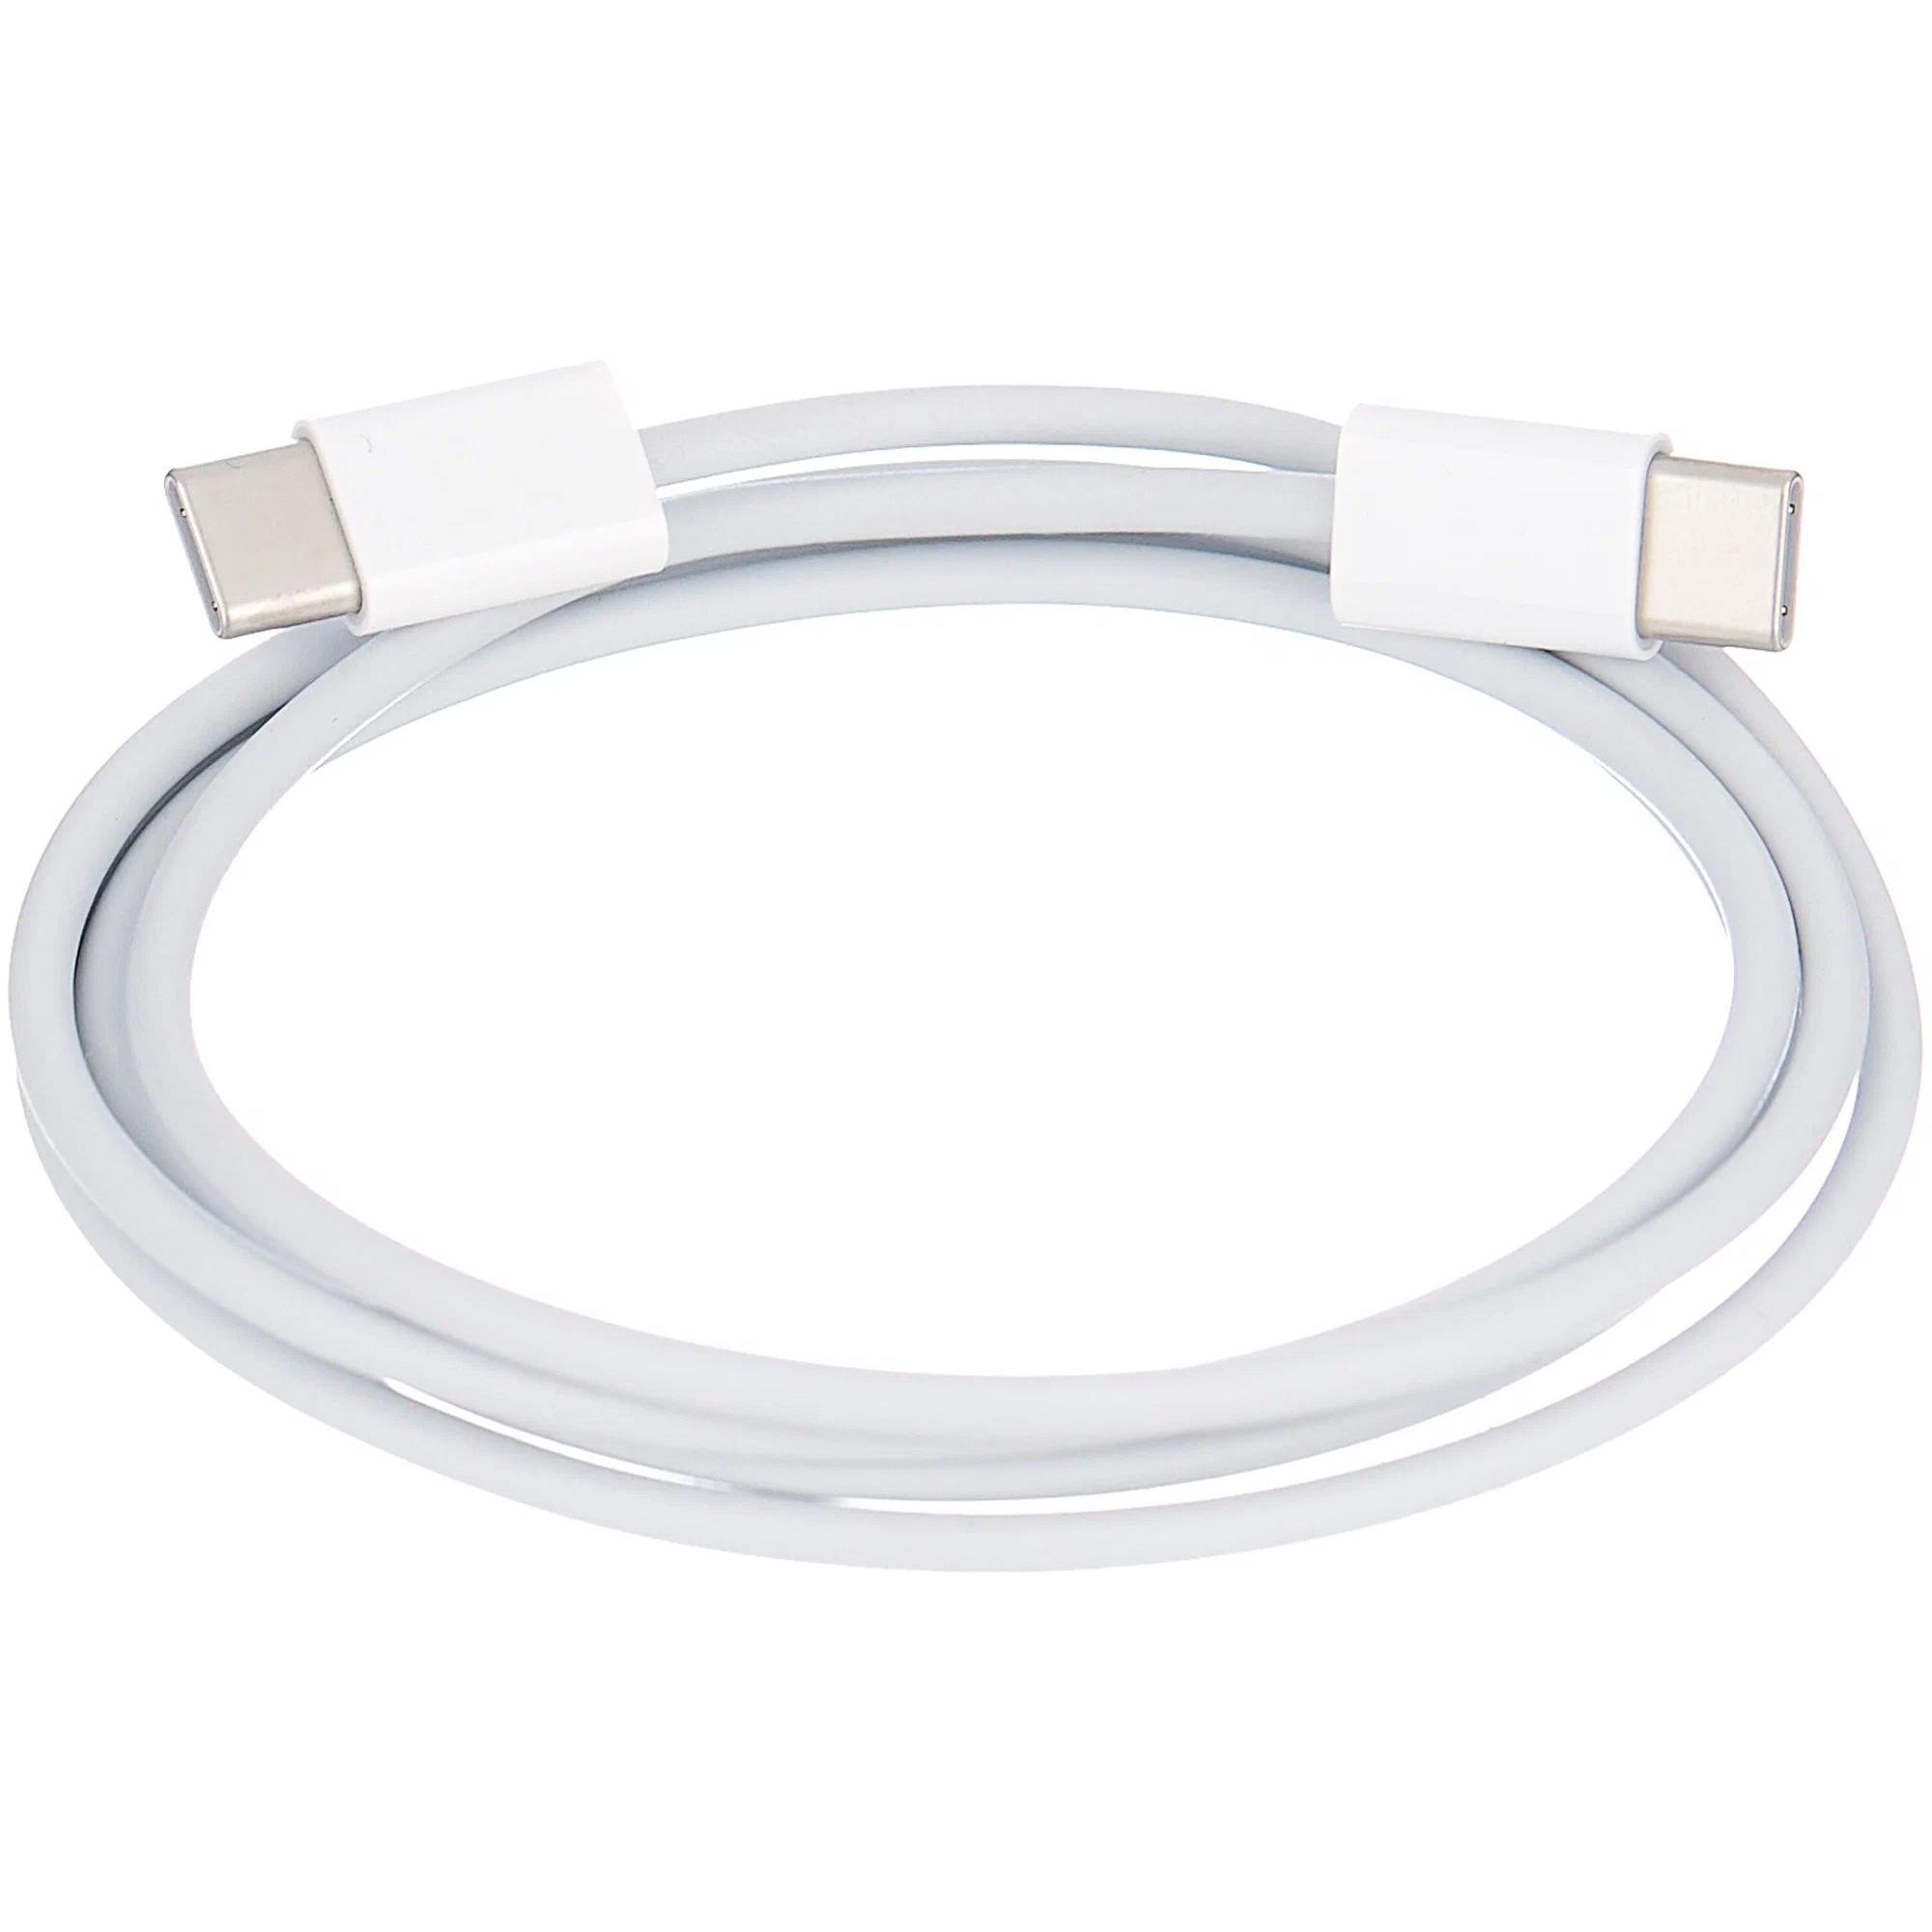 pcd2 k242 кабель соединительный для для 2 х pcd2 k51х или 1 го pcd2 k51х и 1 го pcd2 k551 552 Кабель Apple USB-C Charge Cable (1m) MM093ZM/A